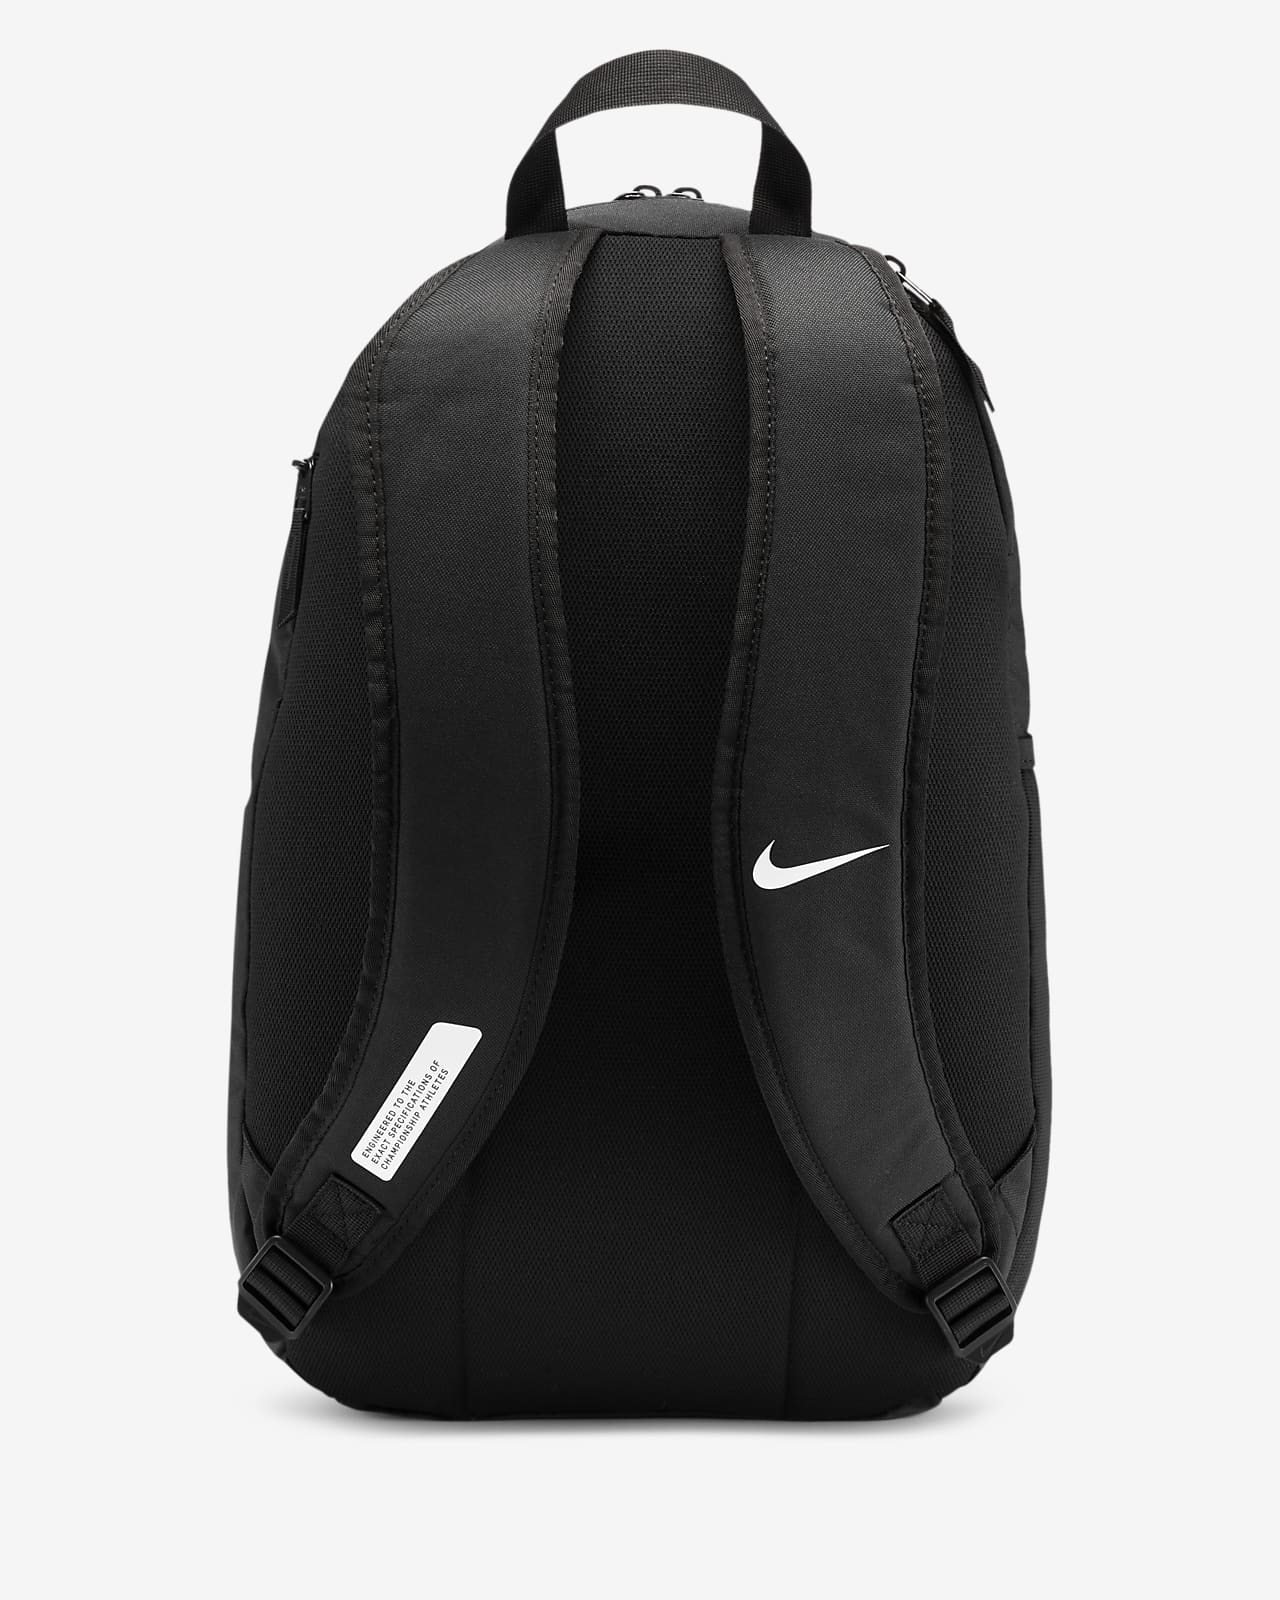 Nike公式 ナイキ アカデミー チーム サッカーバックパック オンラインストア 通販サイト